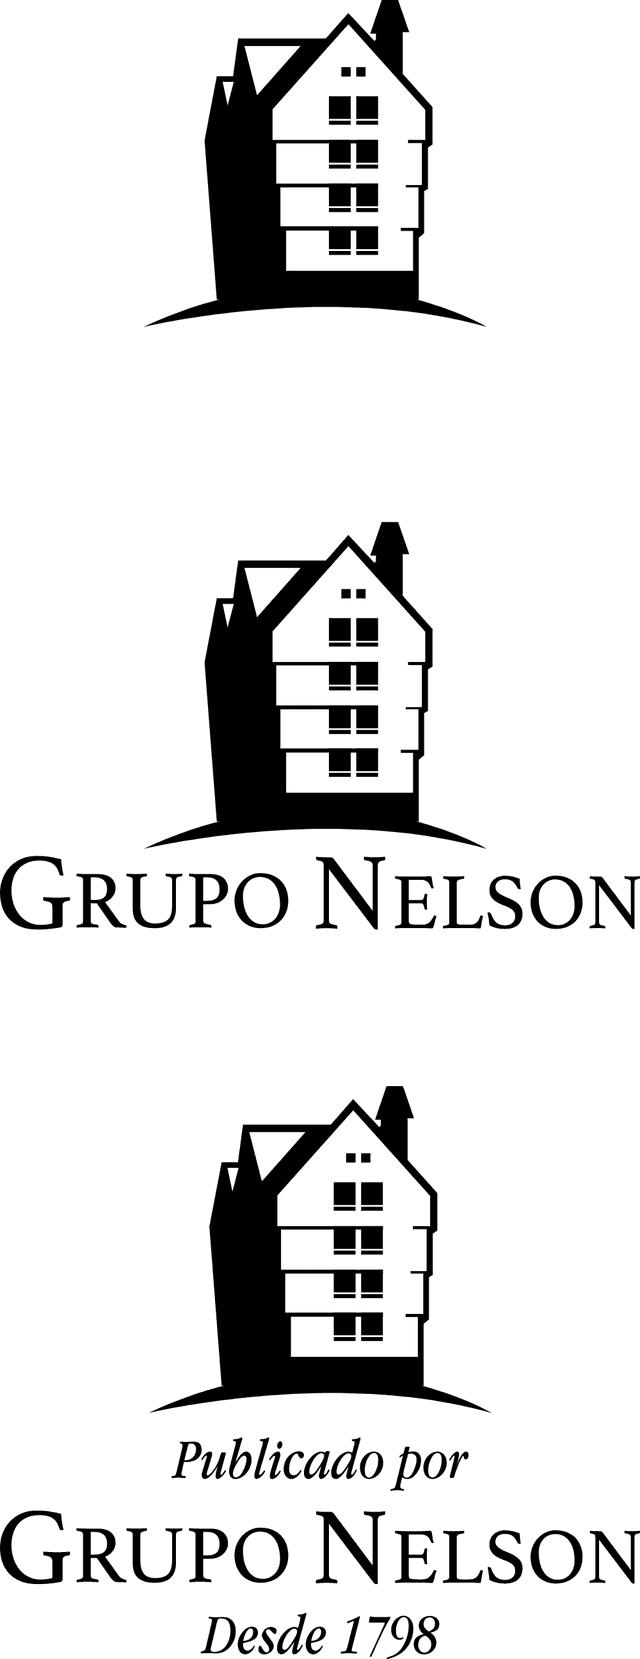 Grupo Nelson Logo download